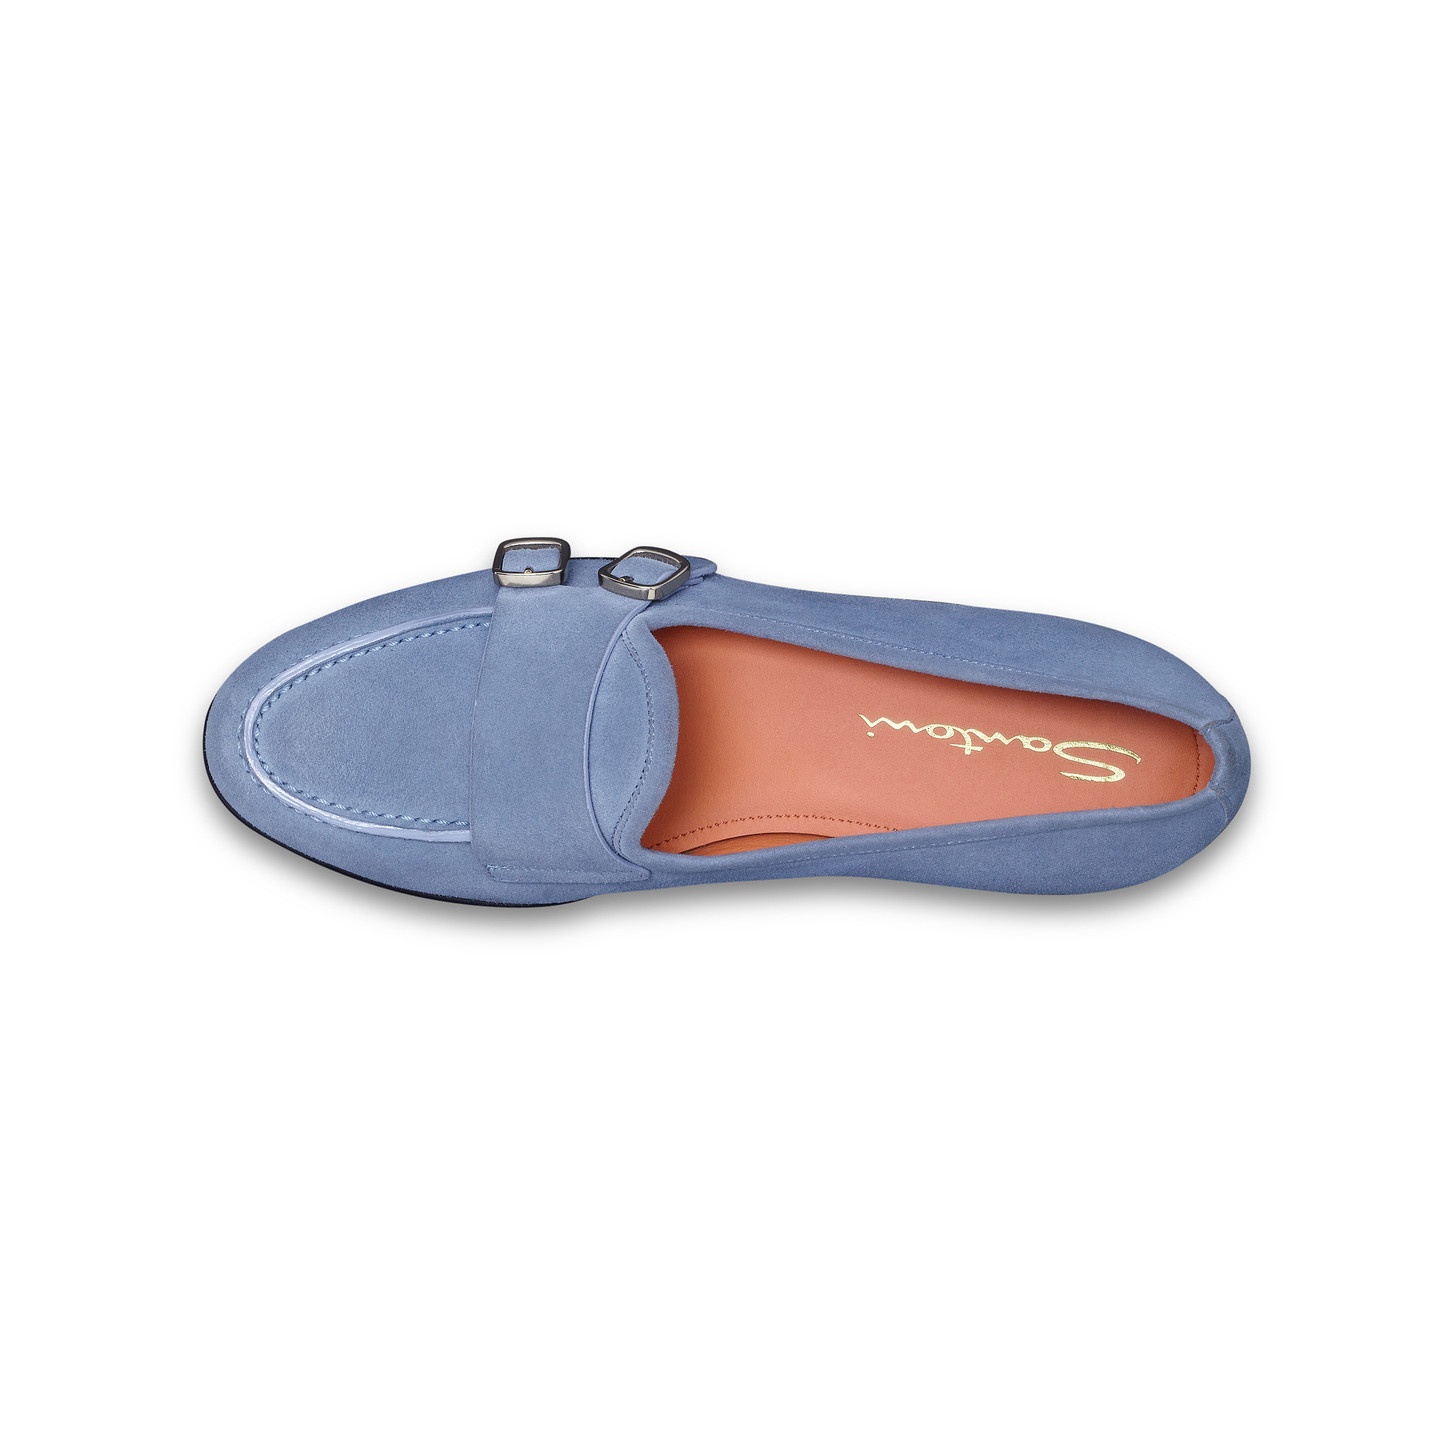 Women's light blue suede Andrea double-buckle loafer - 5